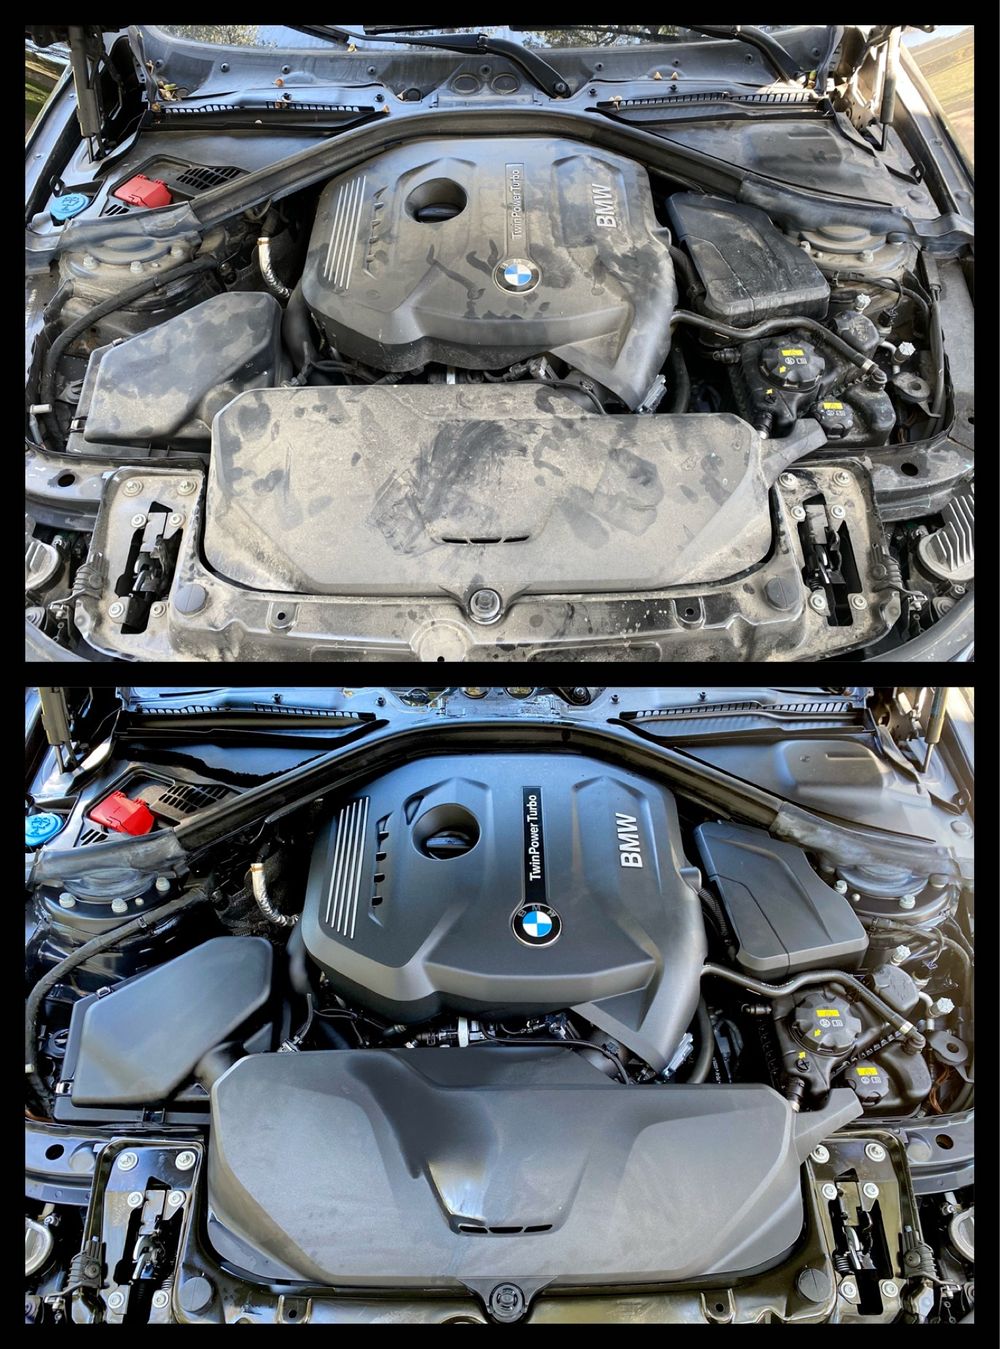 BMW Engine Bay Detailing 5.JPG